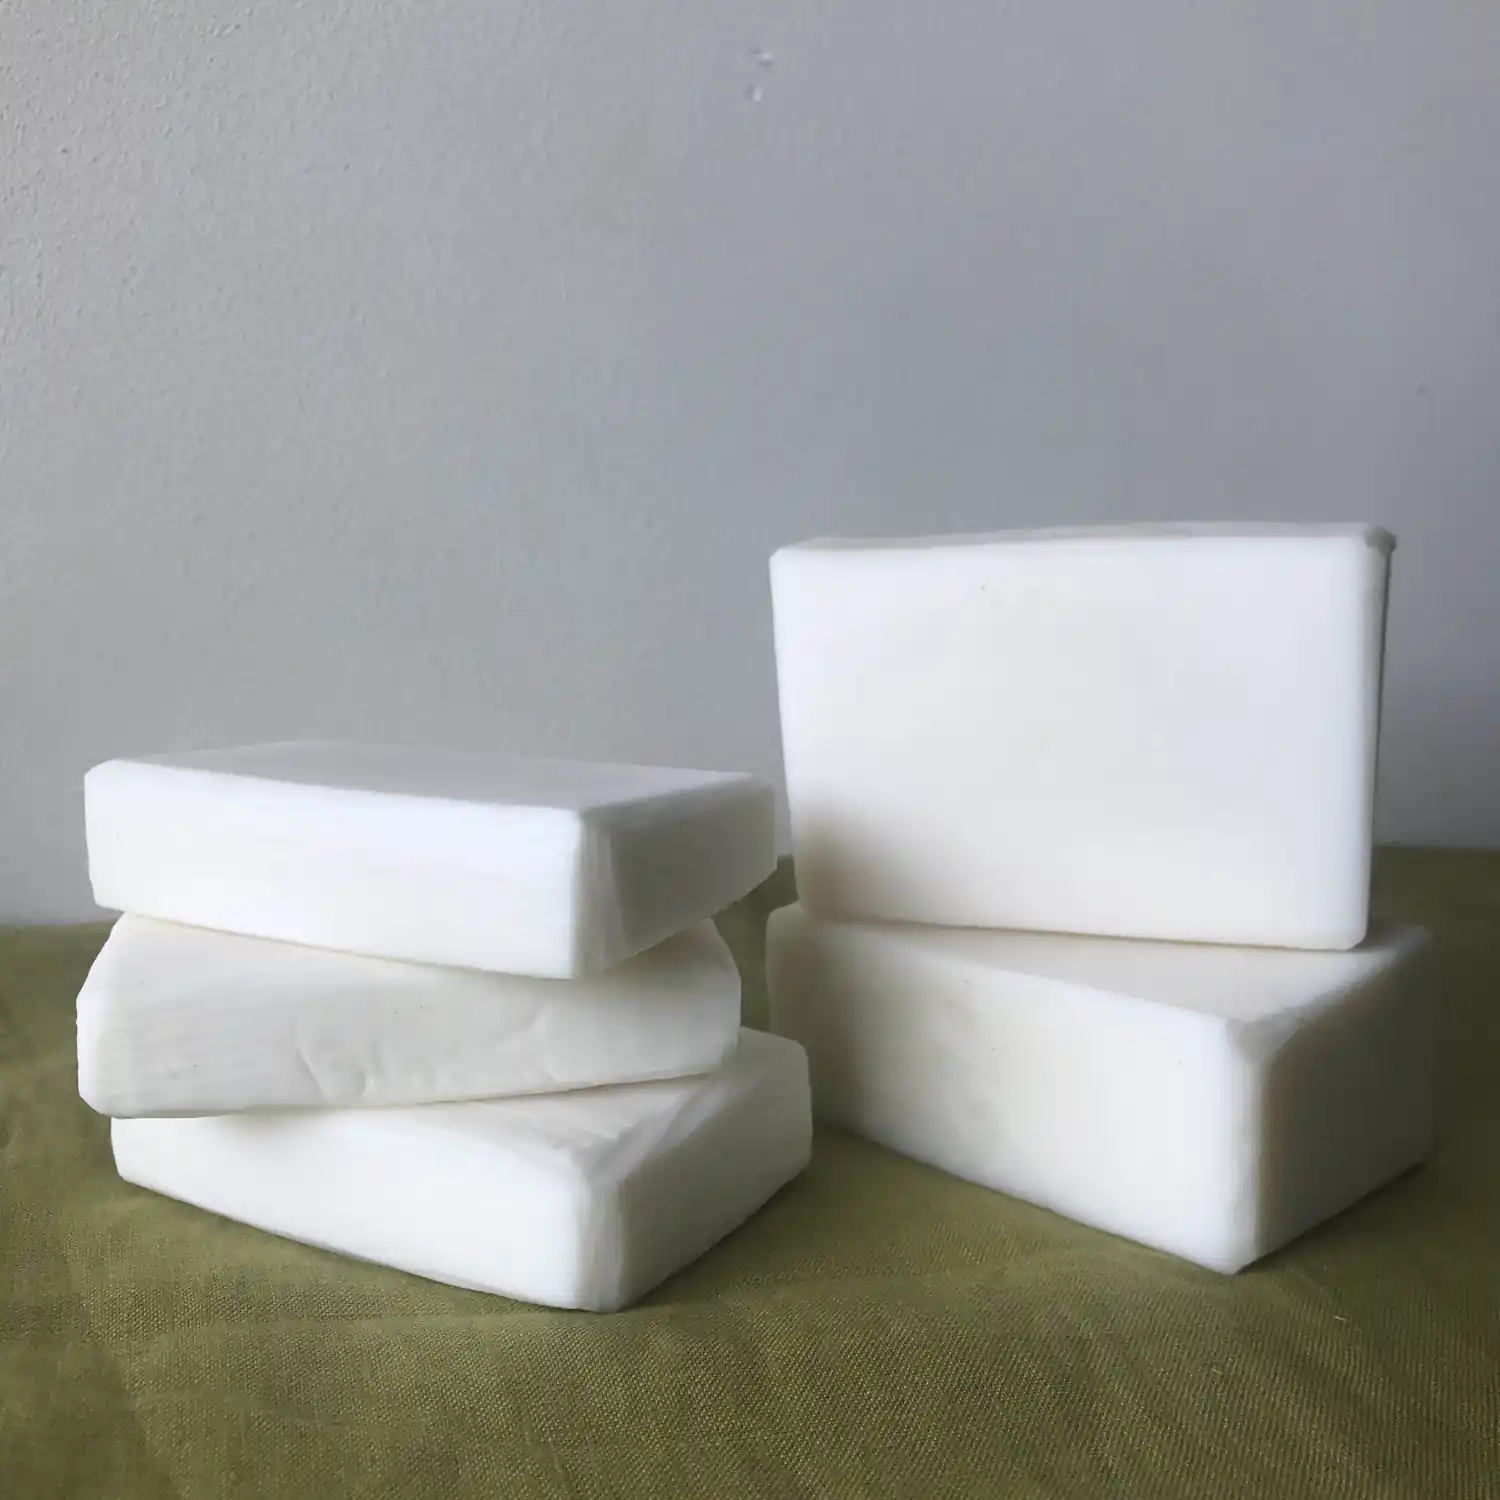 5 bars of white coloured soaps